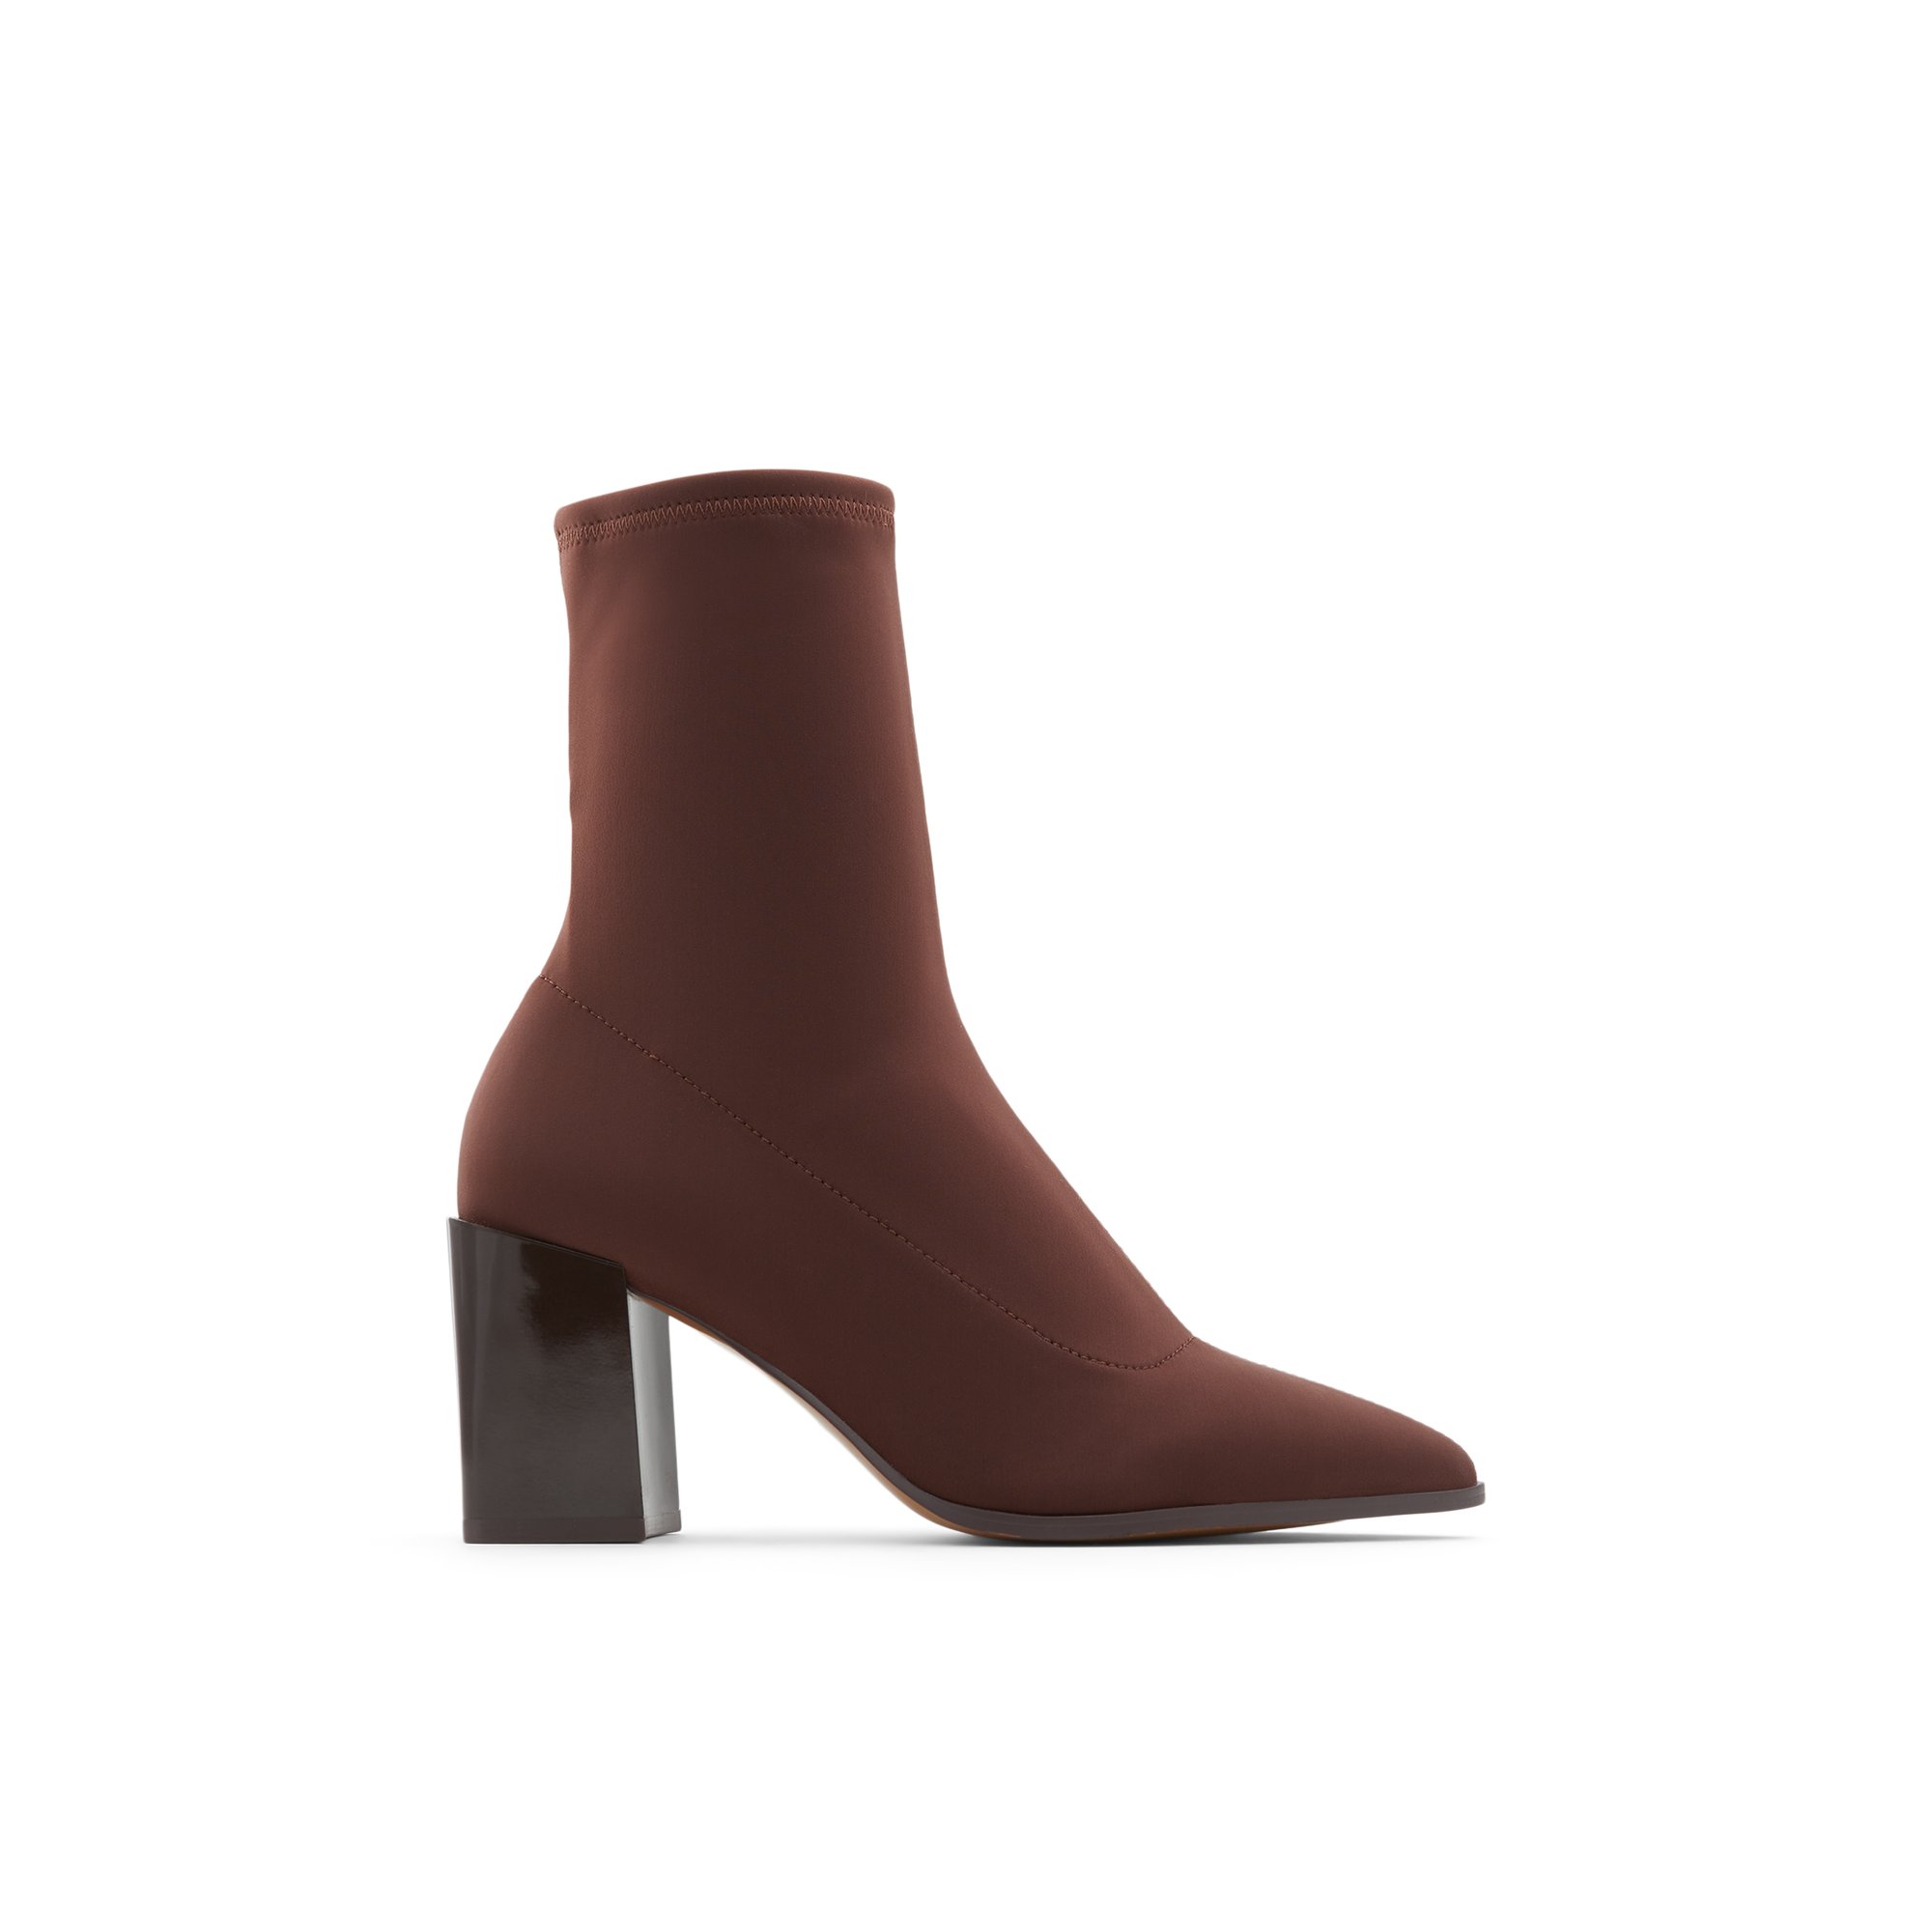 Image of ALDO Adwigocia - Women's Ankle Boot - Brown, Size 9